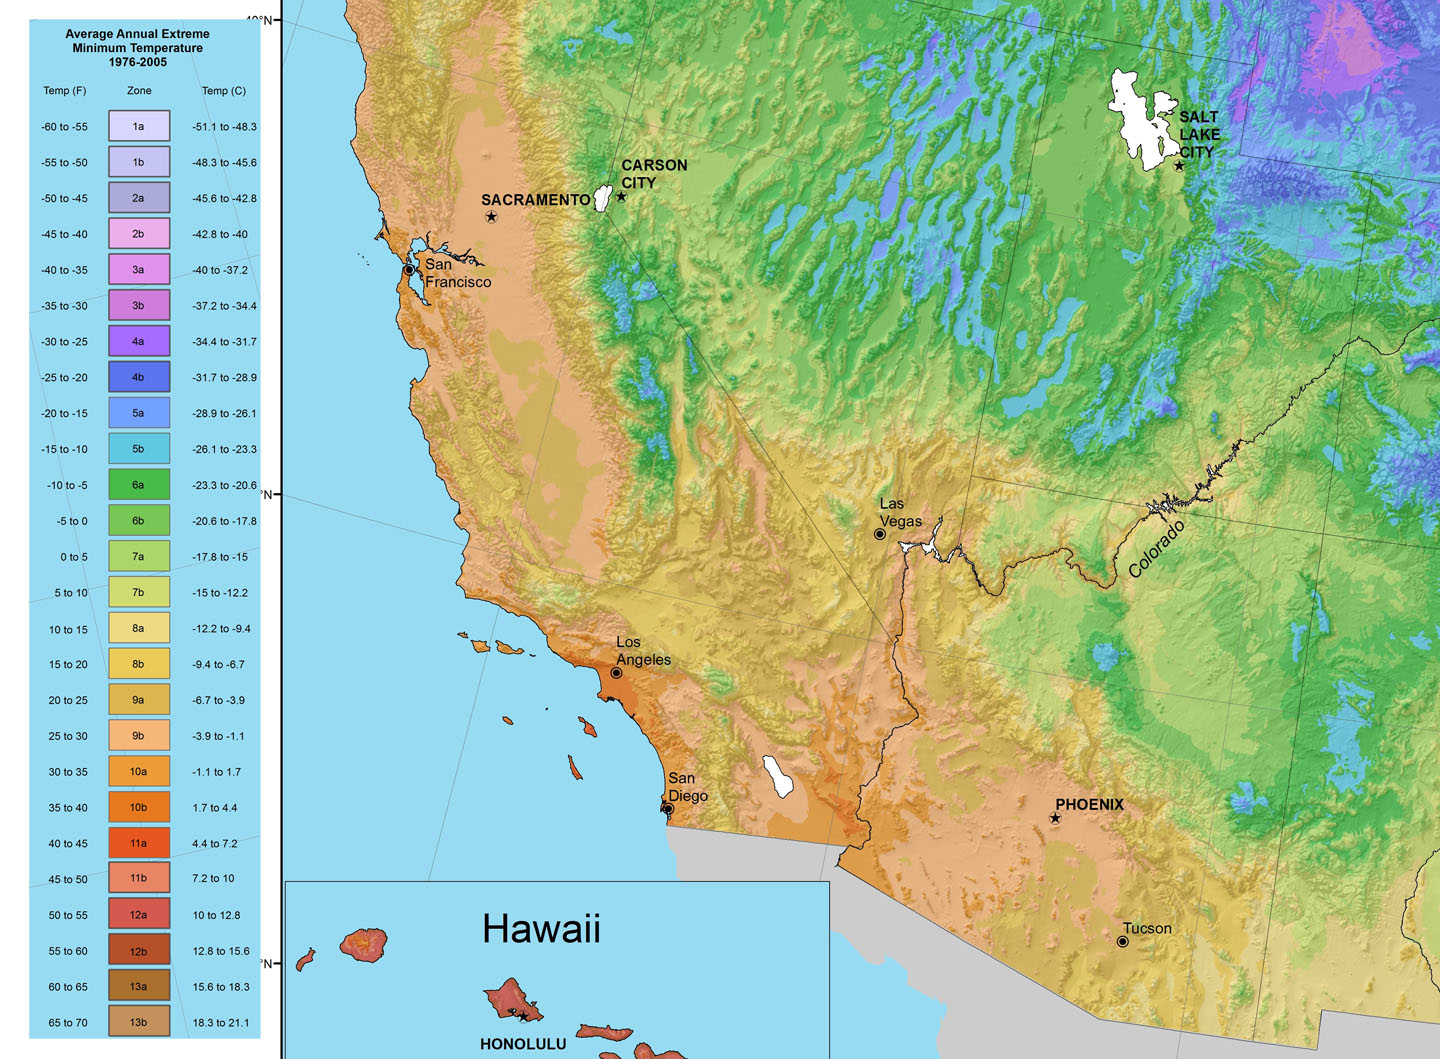 California Climate Zones Map - Klipy - California Heat Zone Map